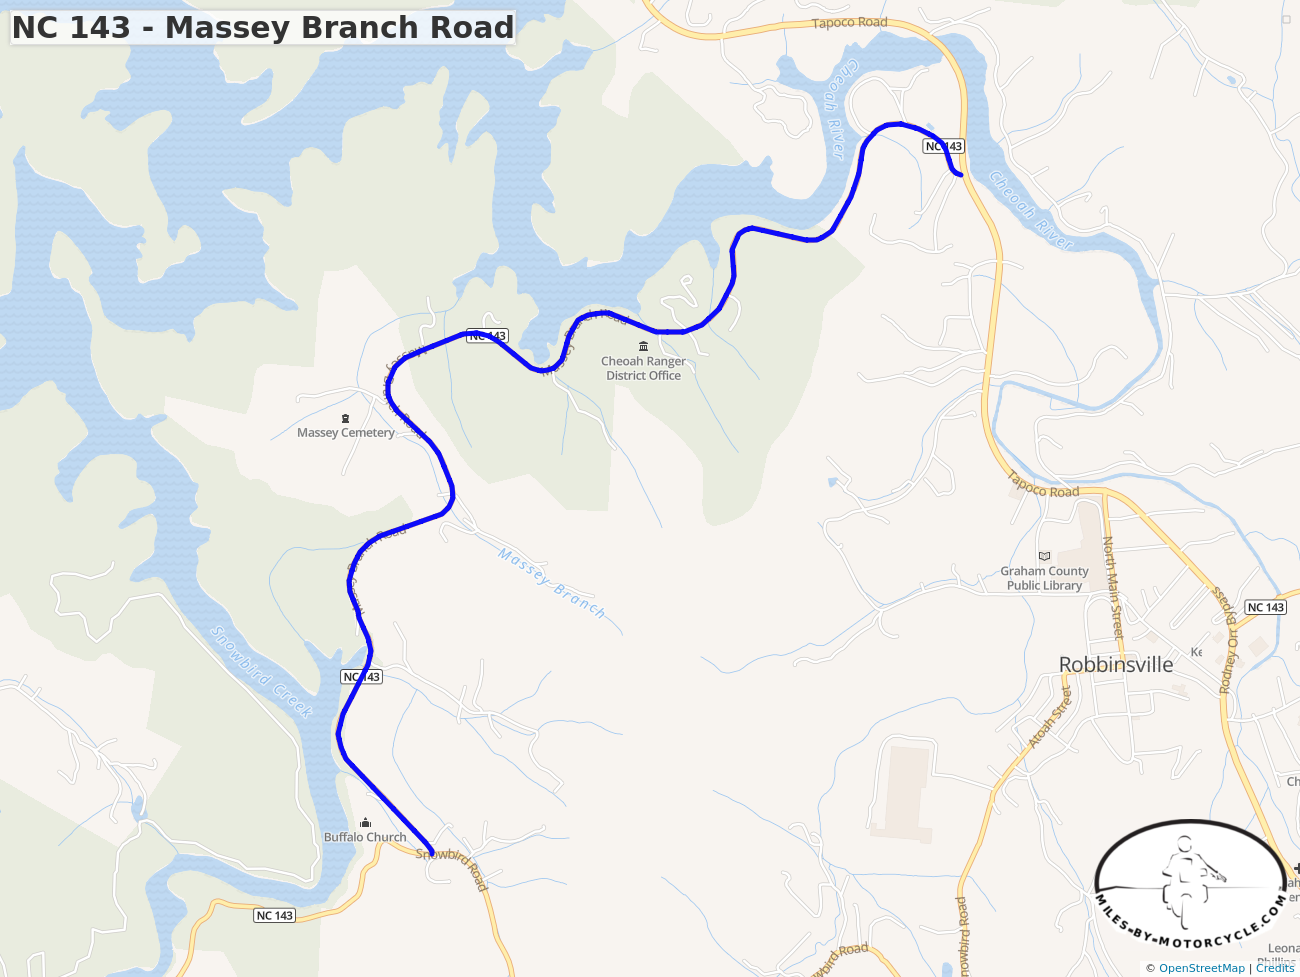 NC 143 - Massey Branch Road